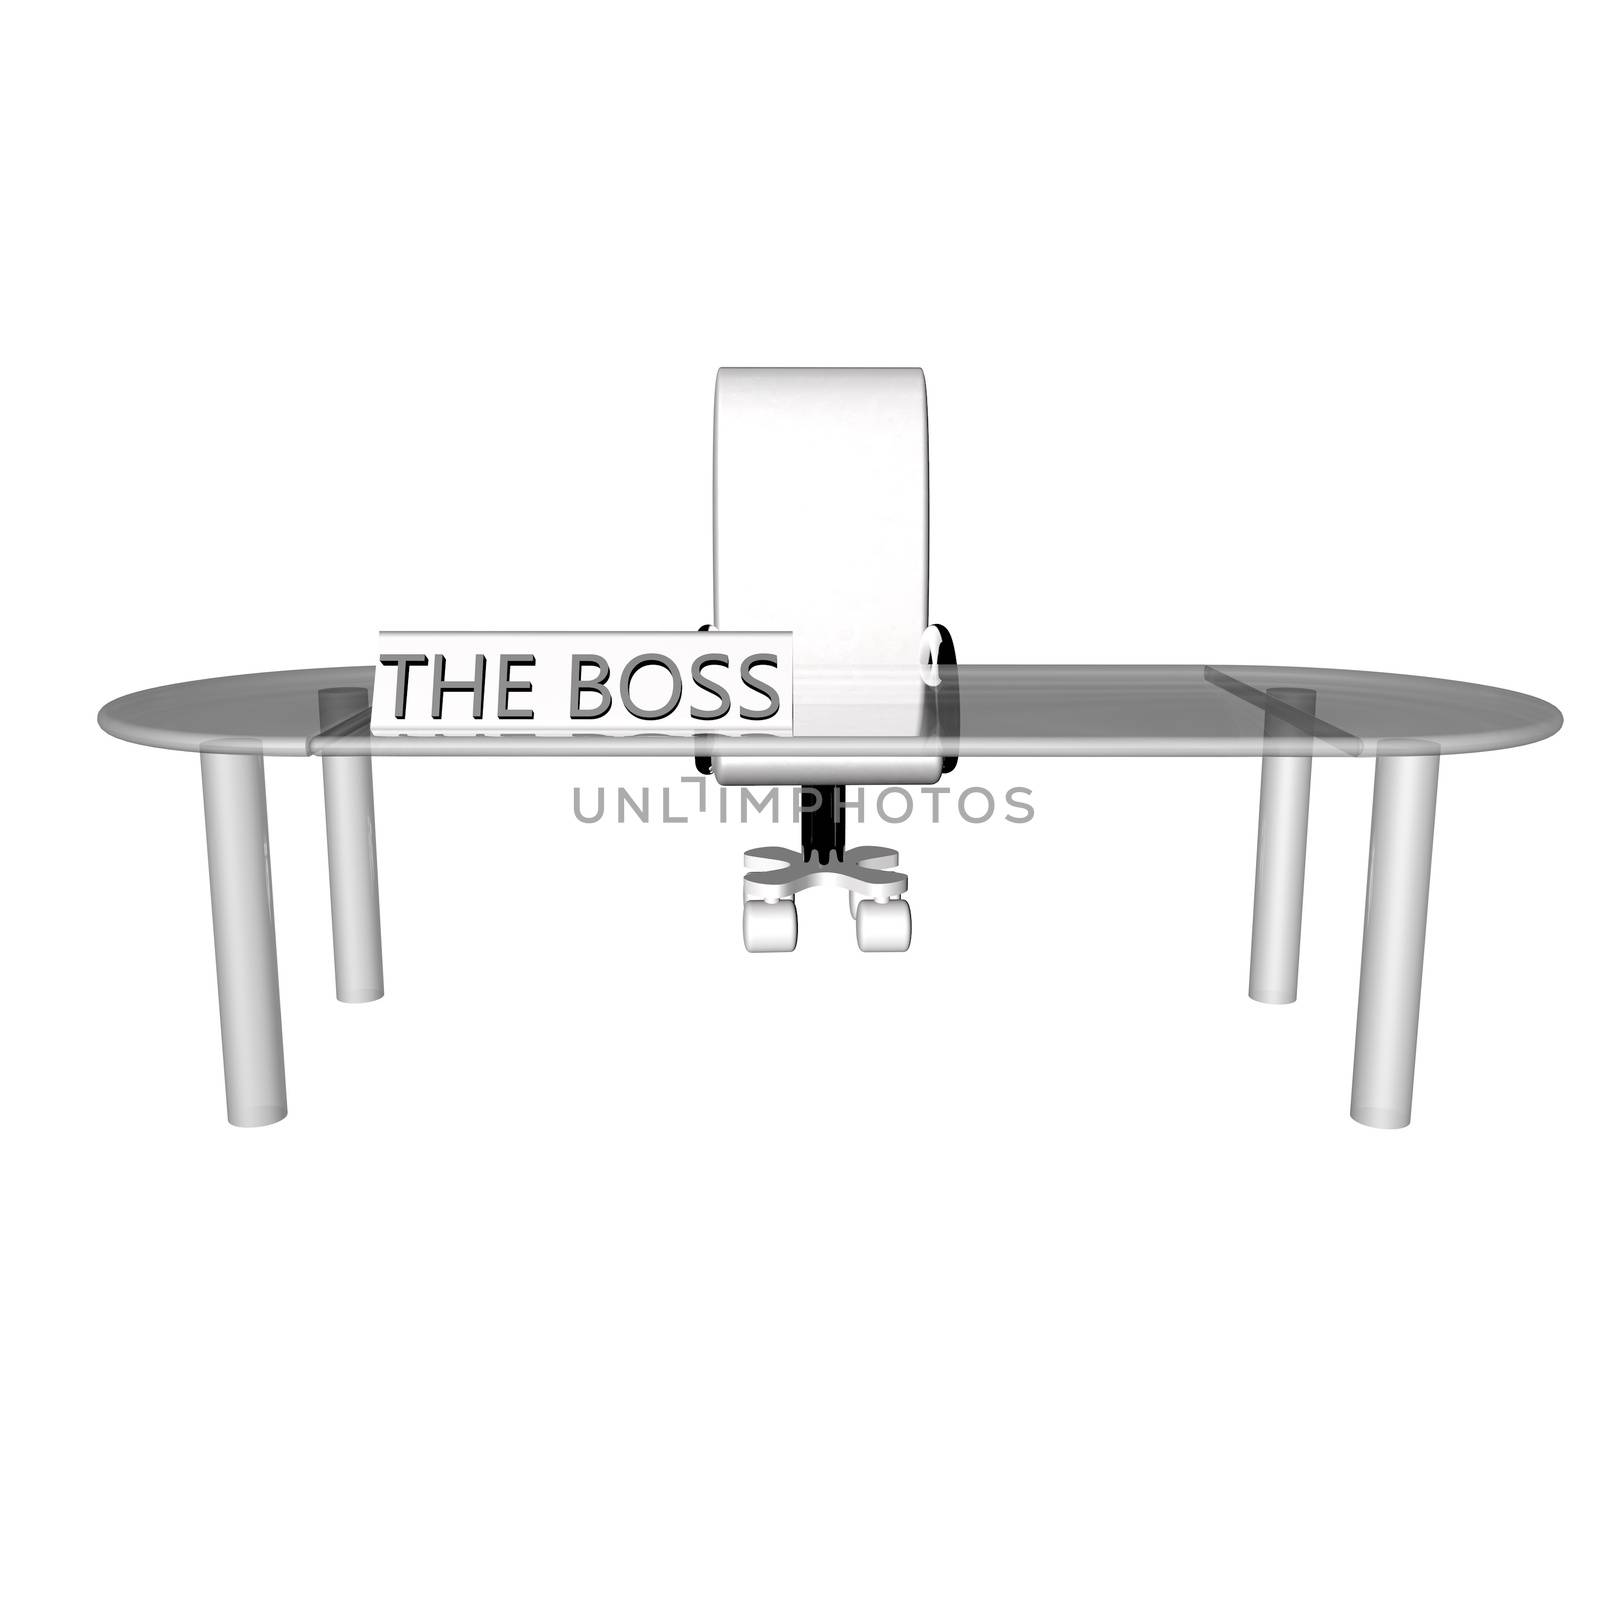 The Boss desk by Koufax73